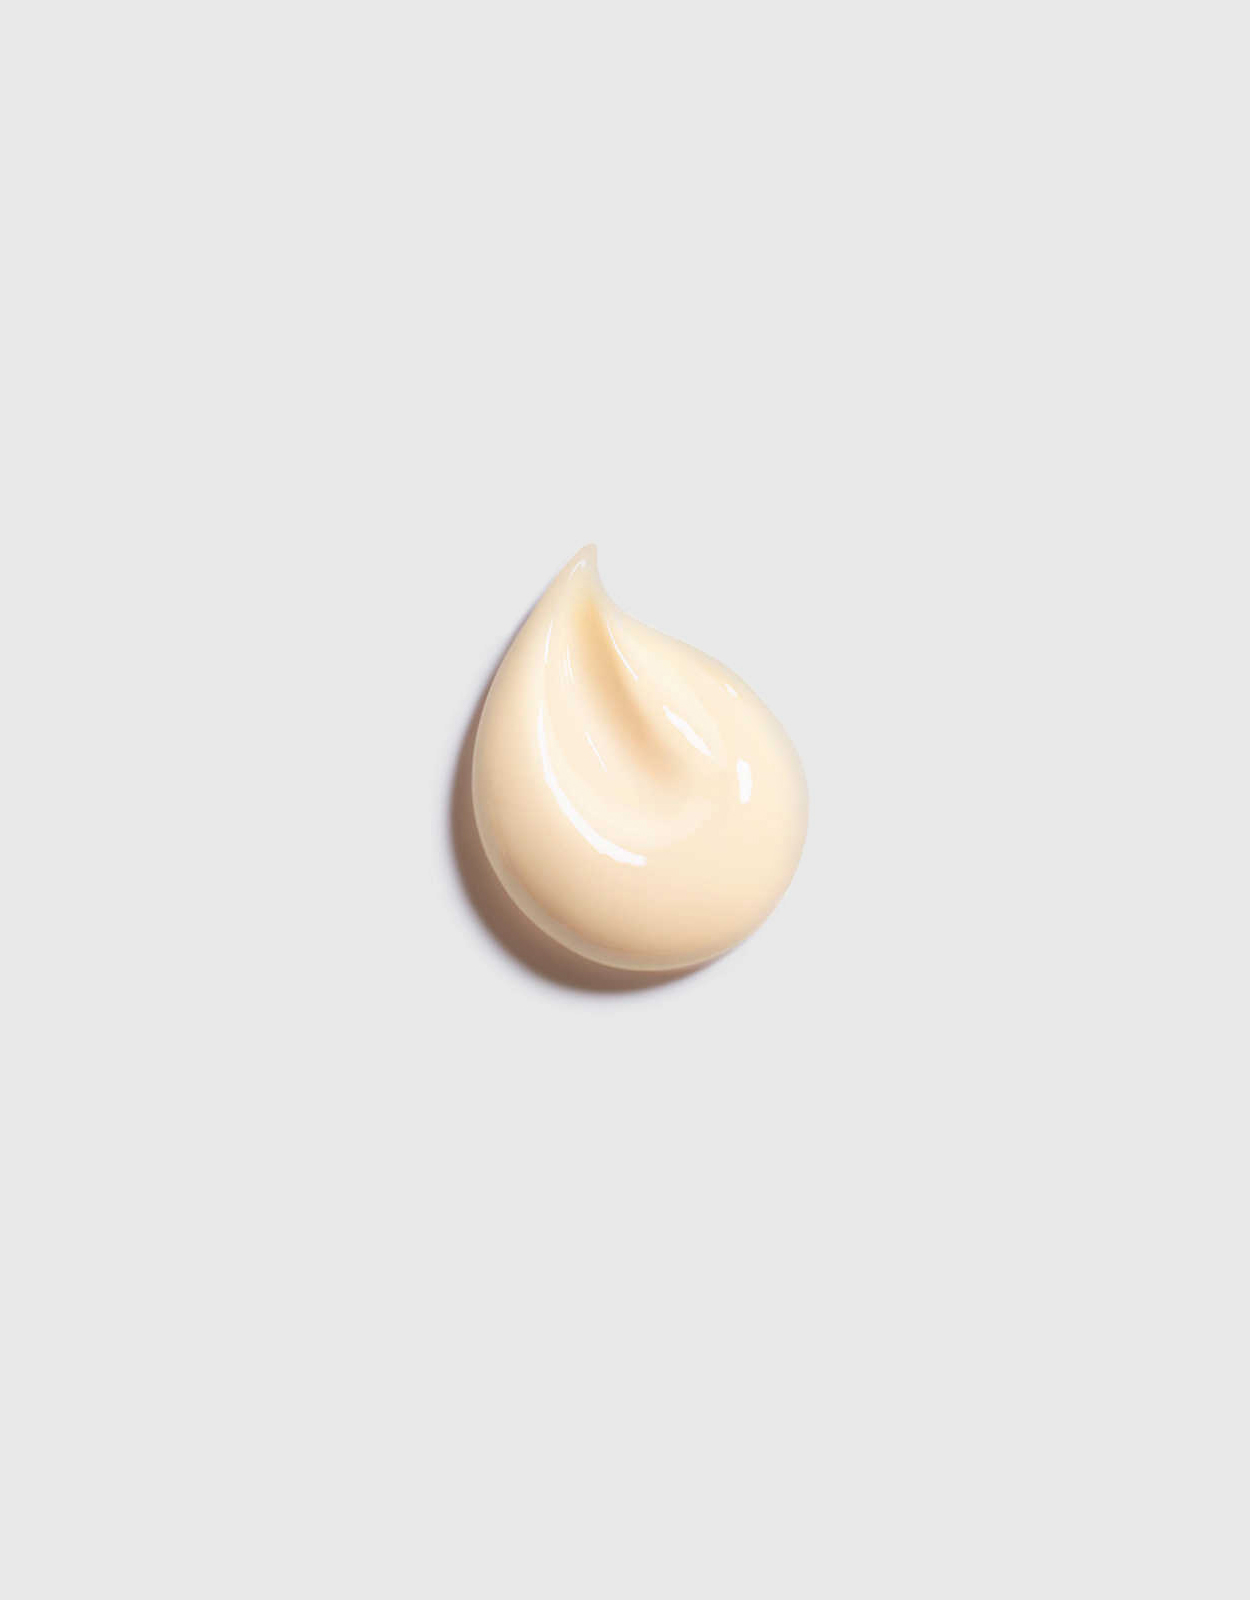 Chanel Beauty Sublimage La Creme Texture Fine Ultimate Cream 50g  (Skincare,Moisturizer,Day and Night Cream)